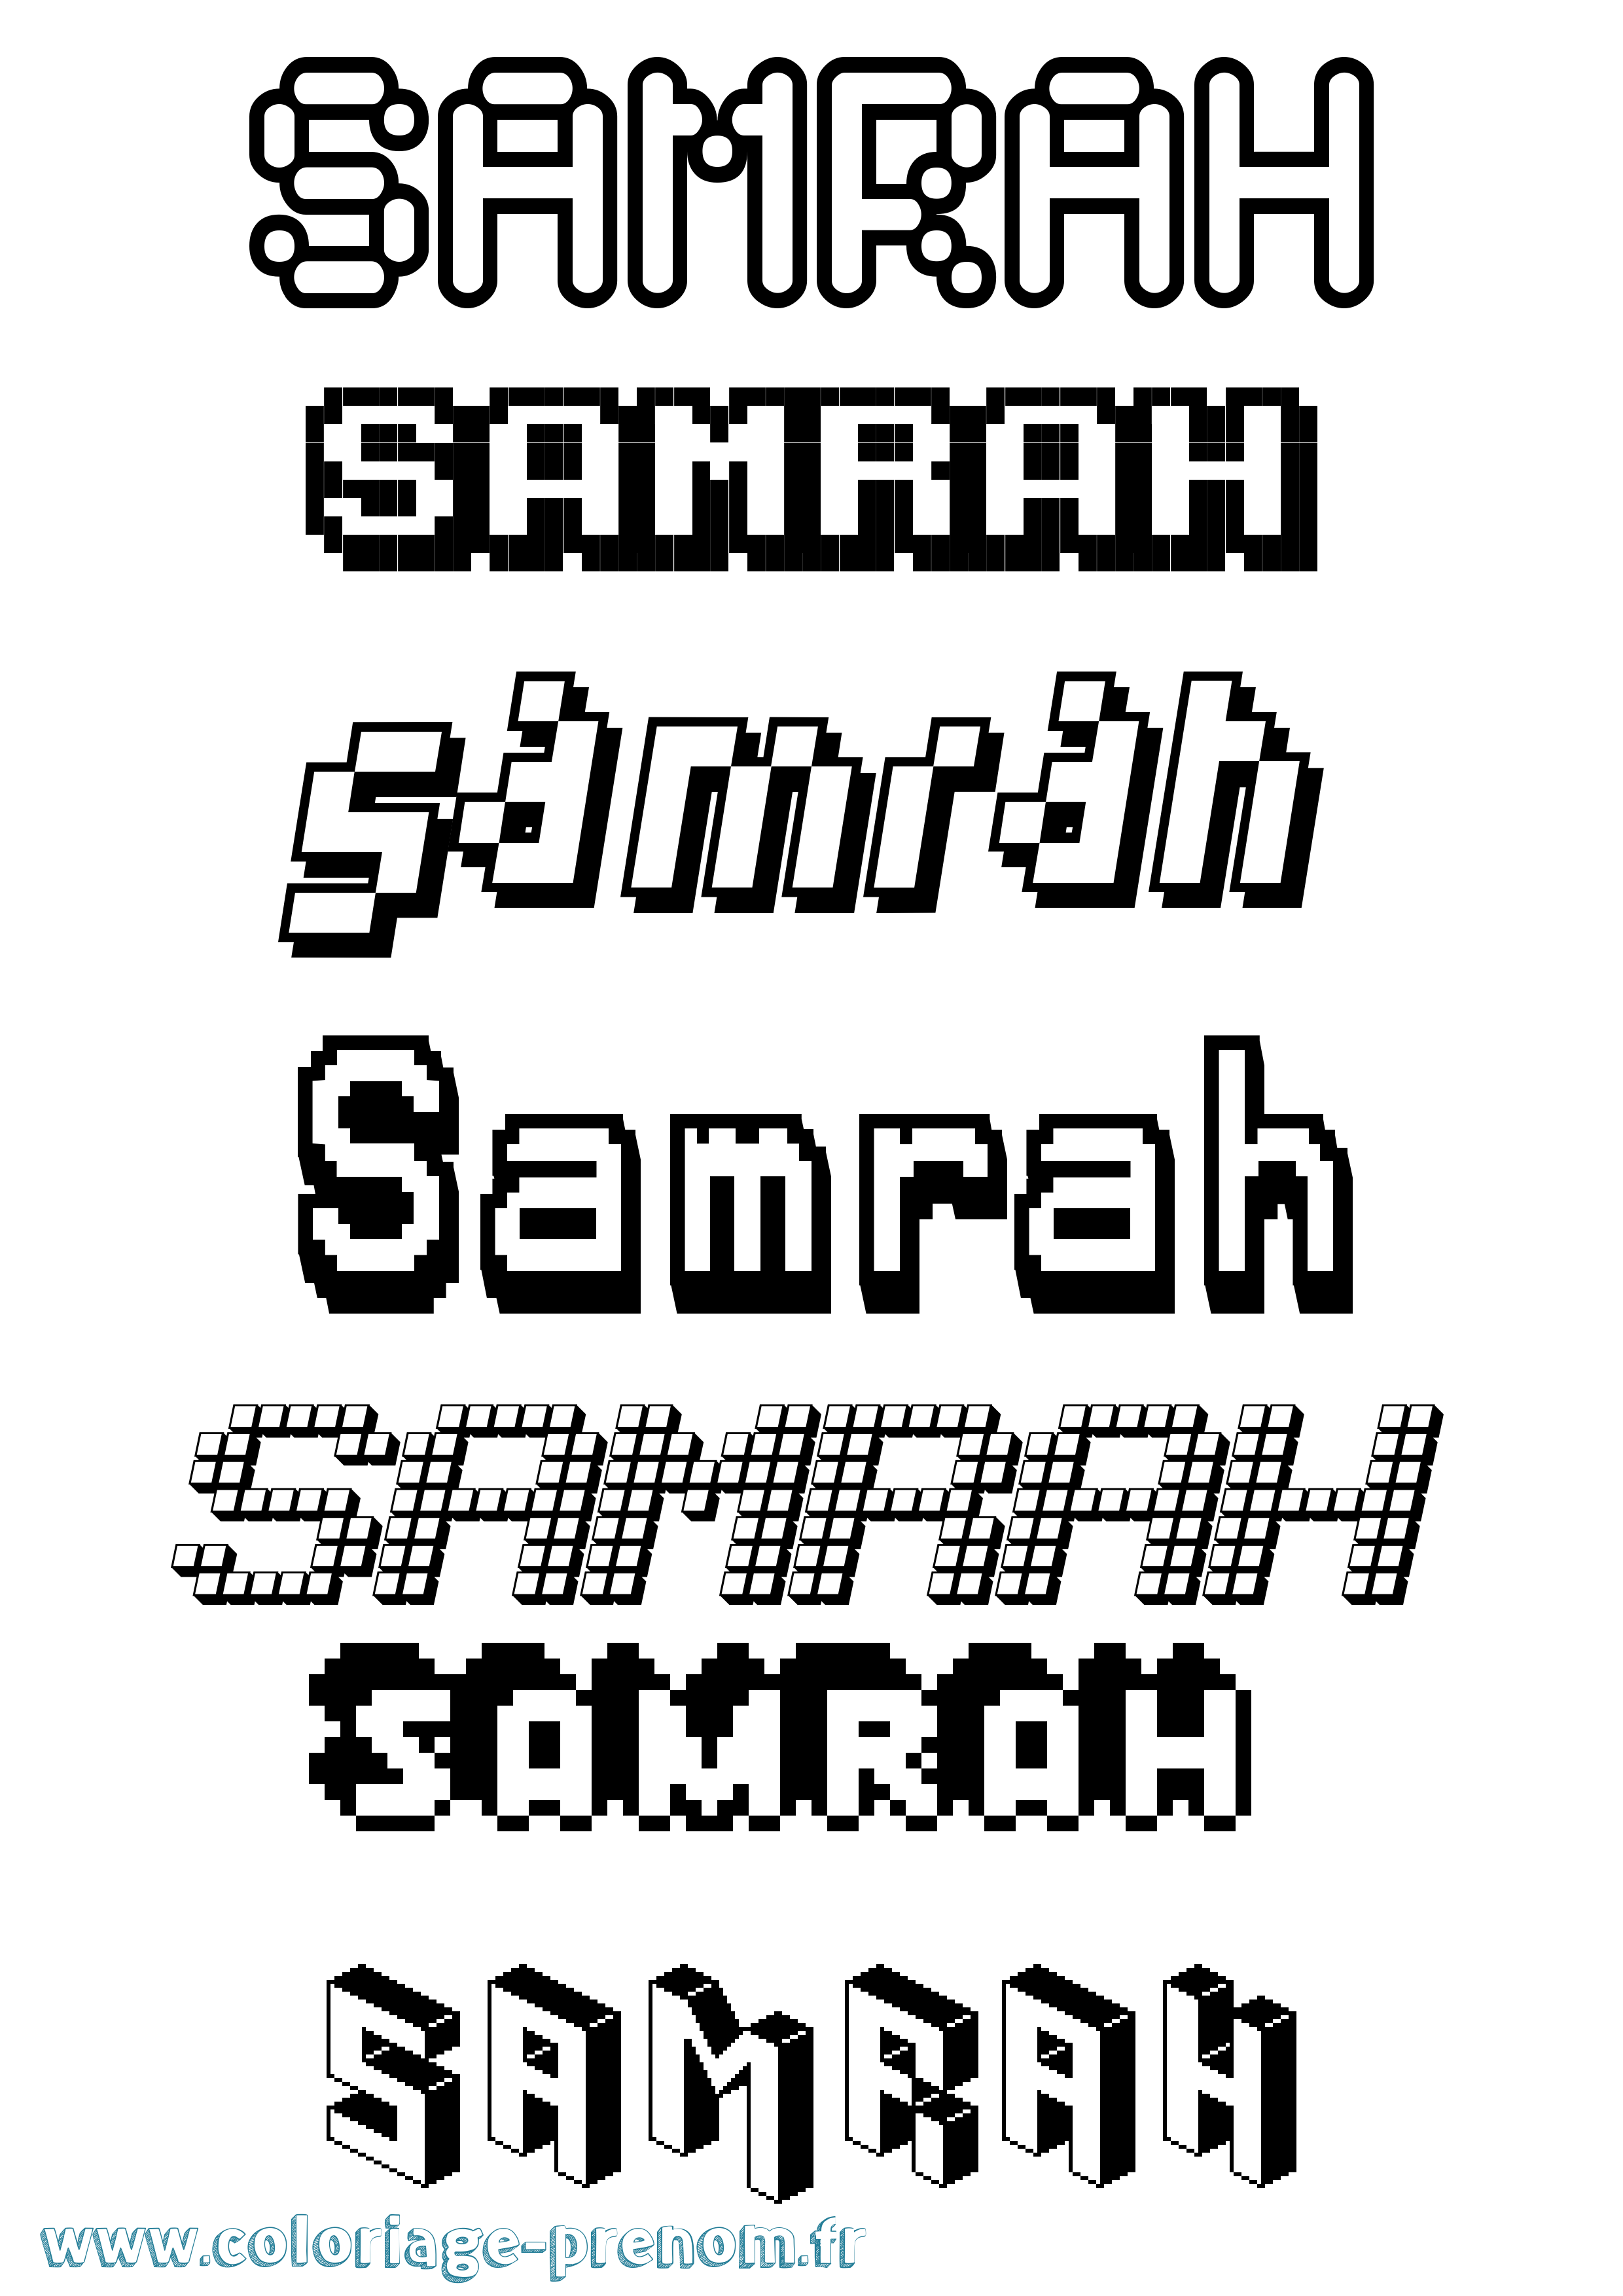 Coloriage prénom Samrah Pixel